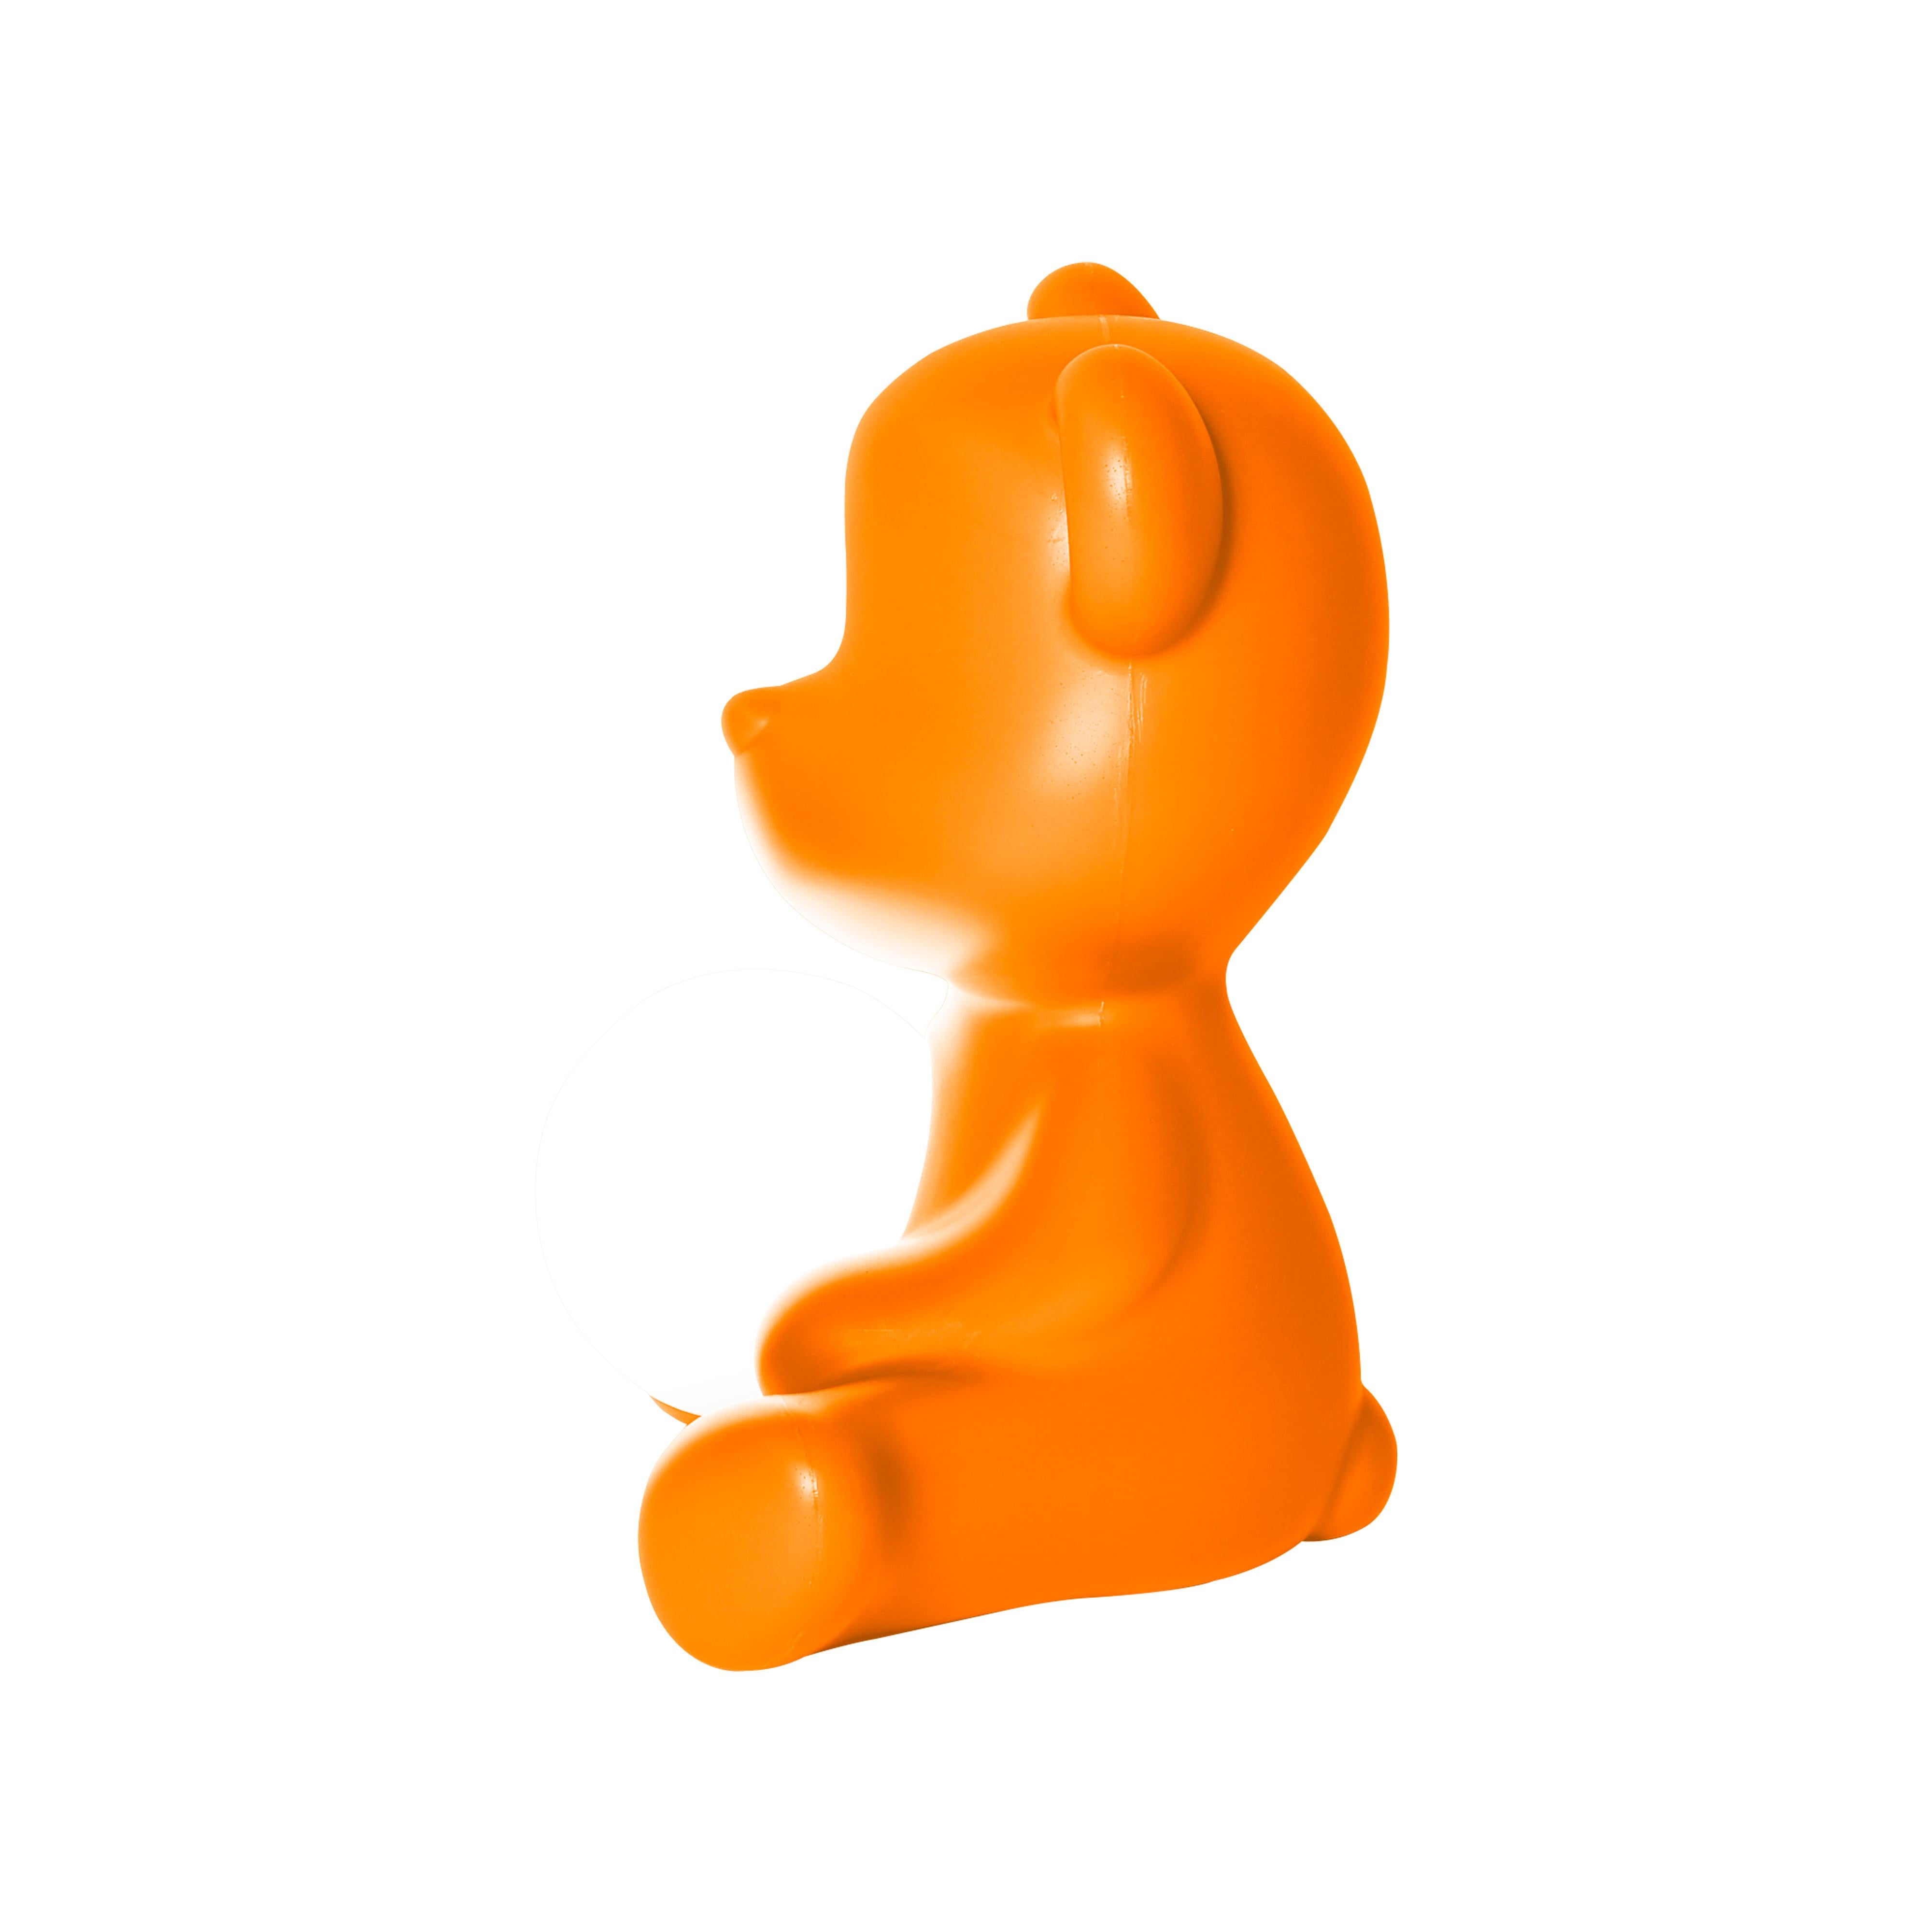 En vente : Orange Lampe de bureau moderne en forme d'ours Teddy, violet, vert, orange, rose, blanc, bleu, noir ou jaune 6